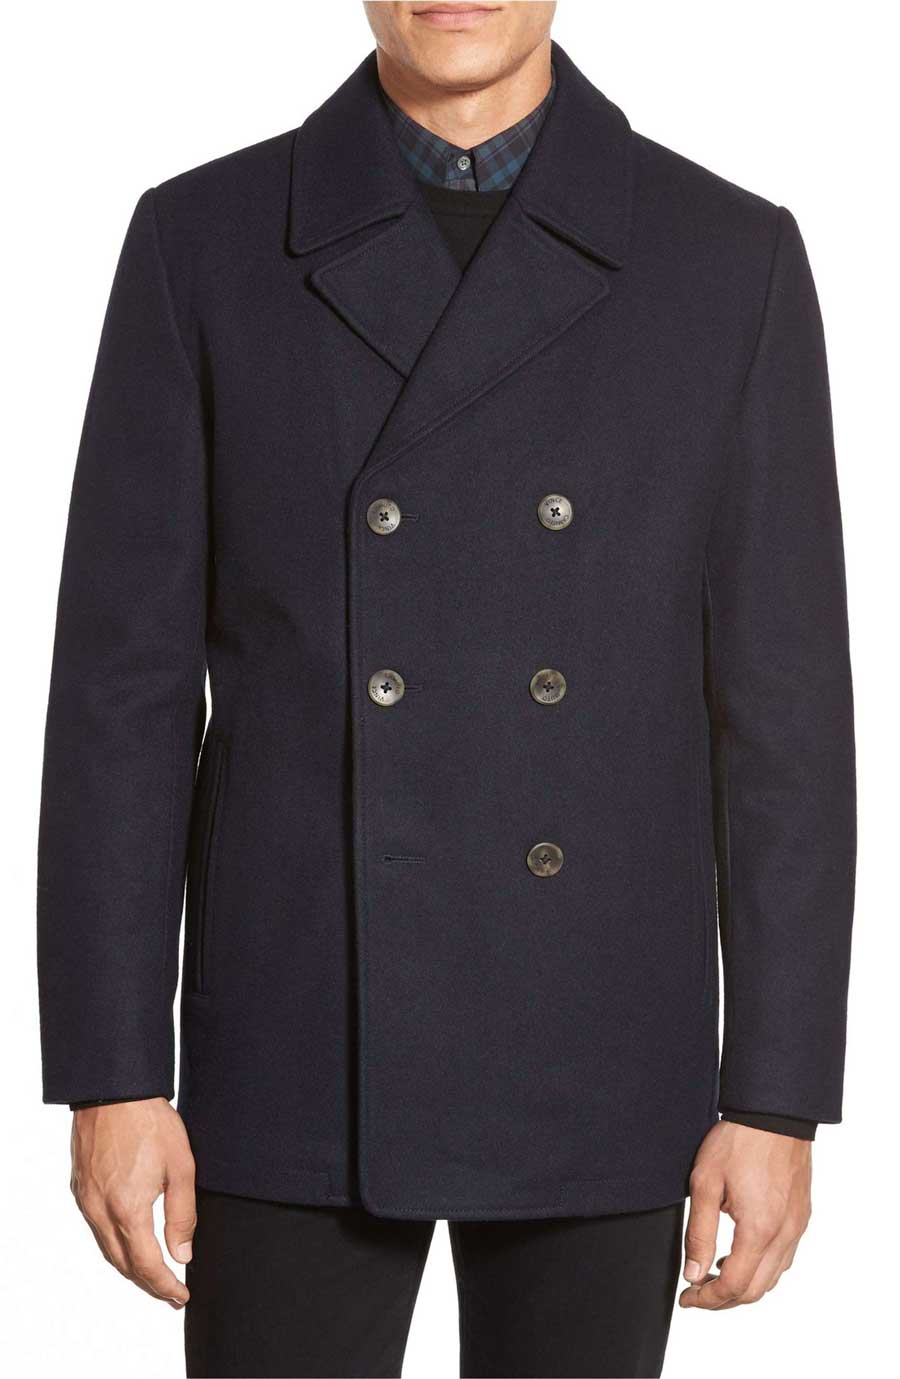 A man wearing a pea coat